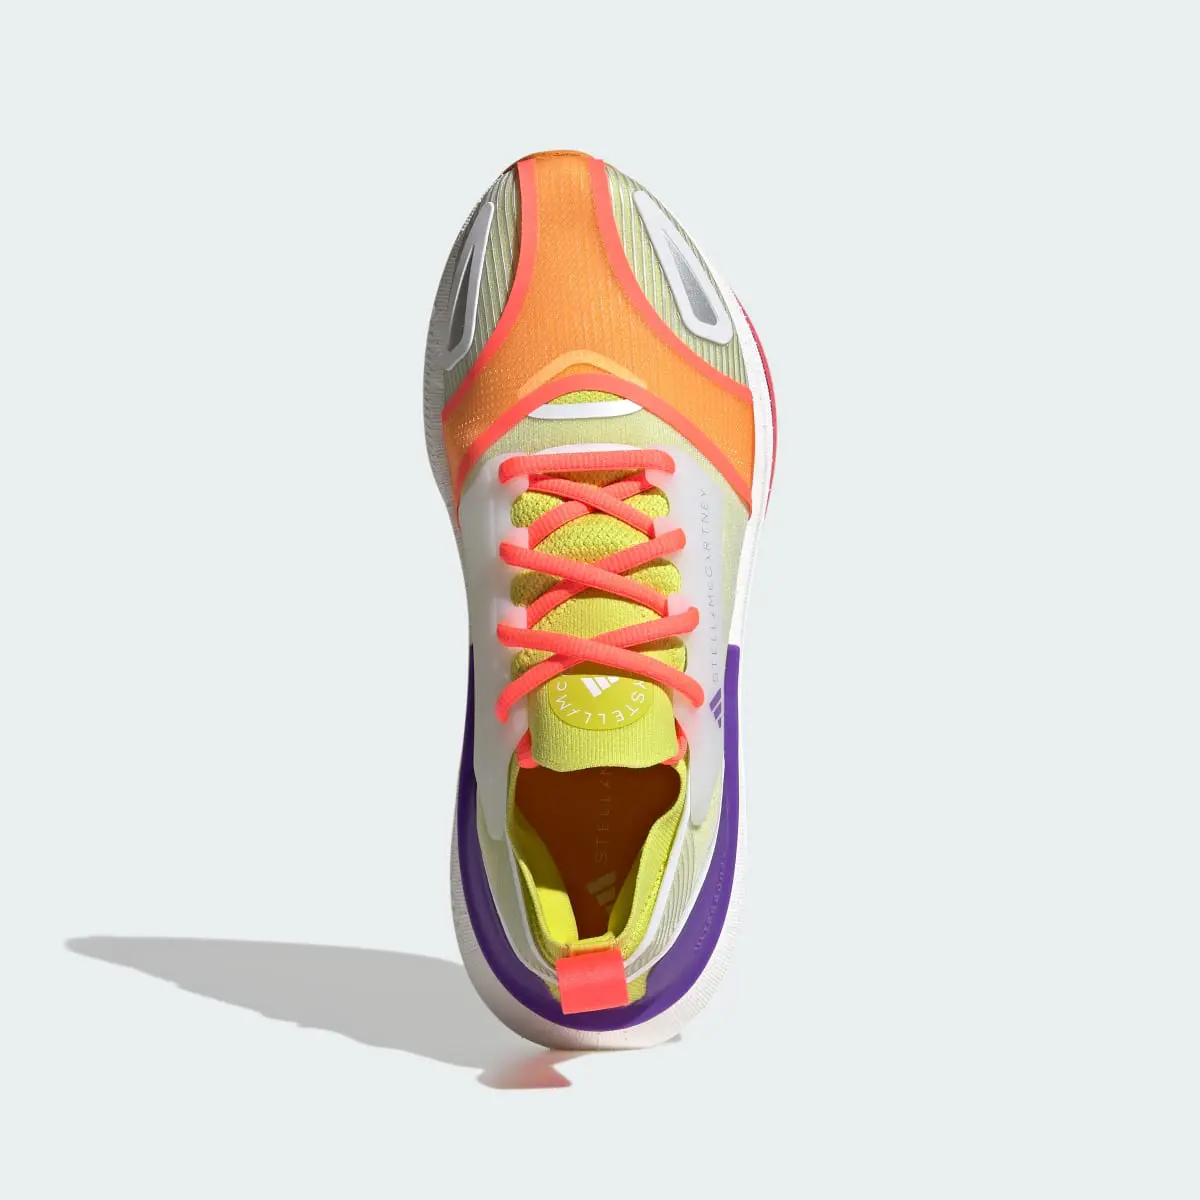 Adidas by Stella McCartney Ultraboost Light Shoes. 3